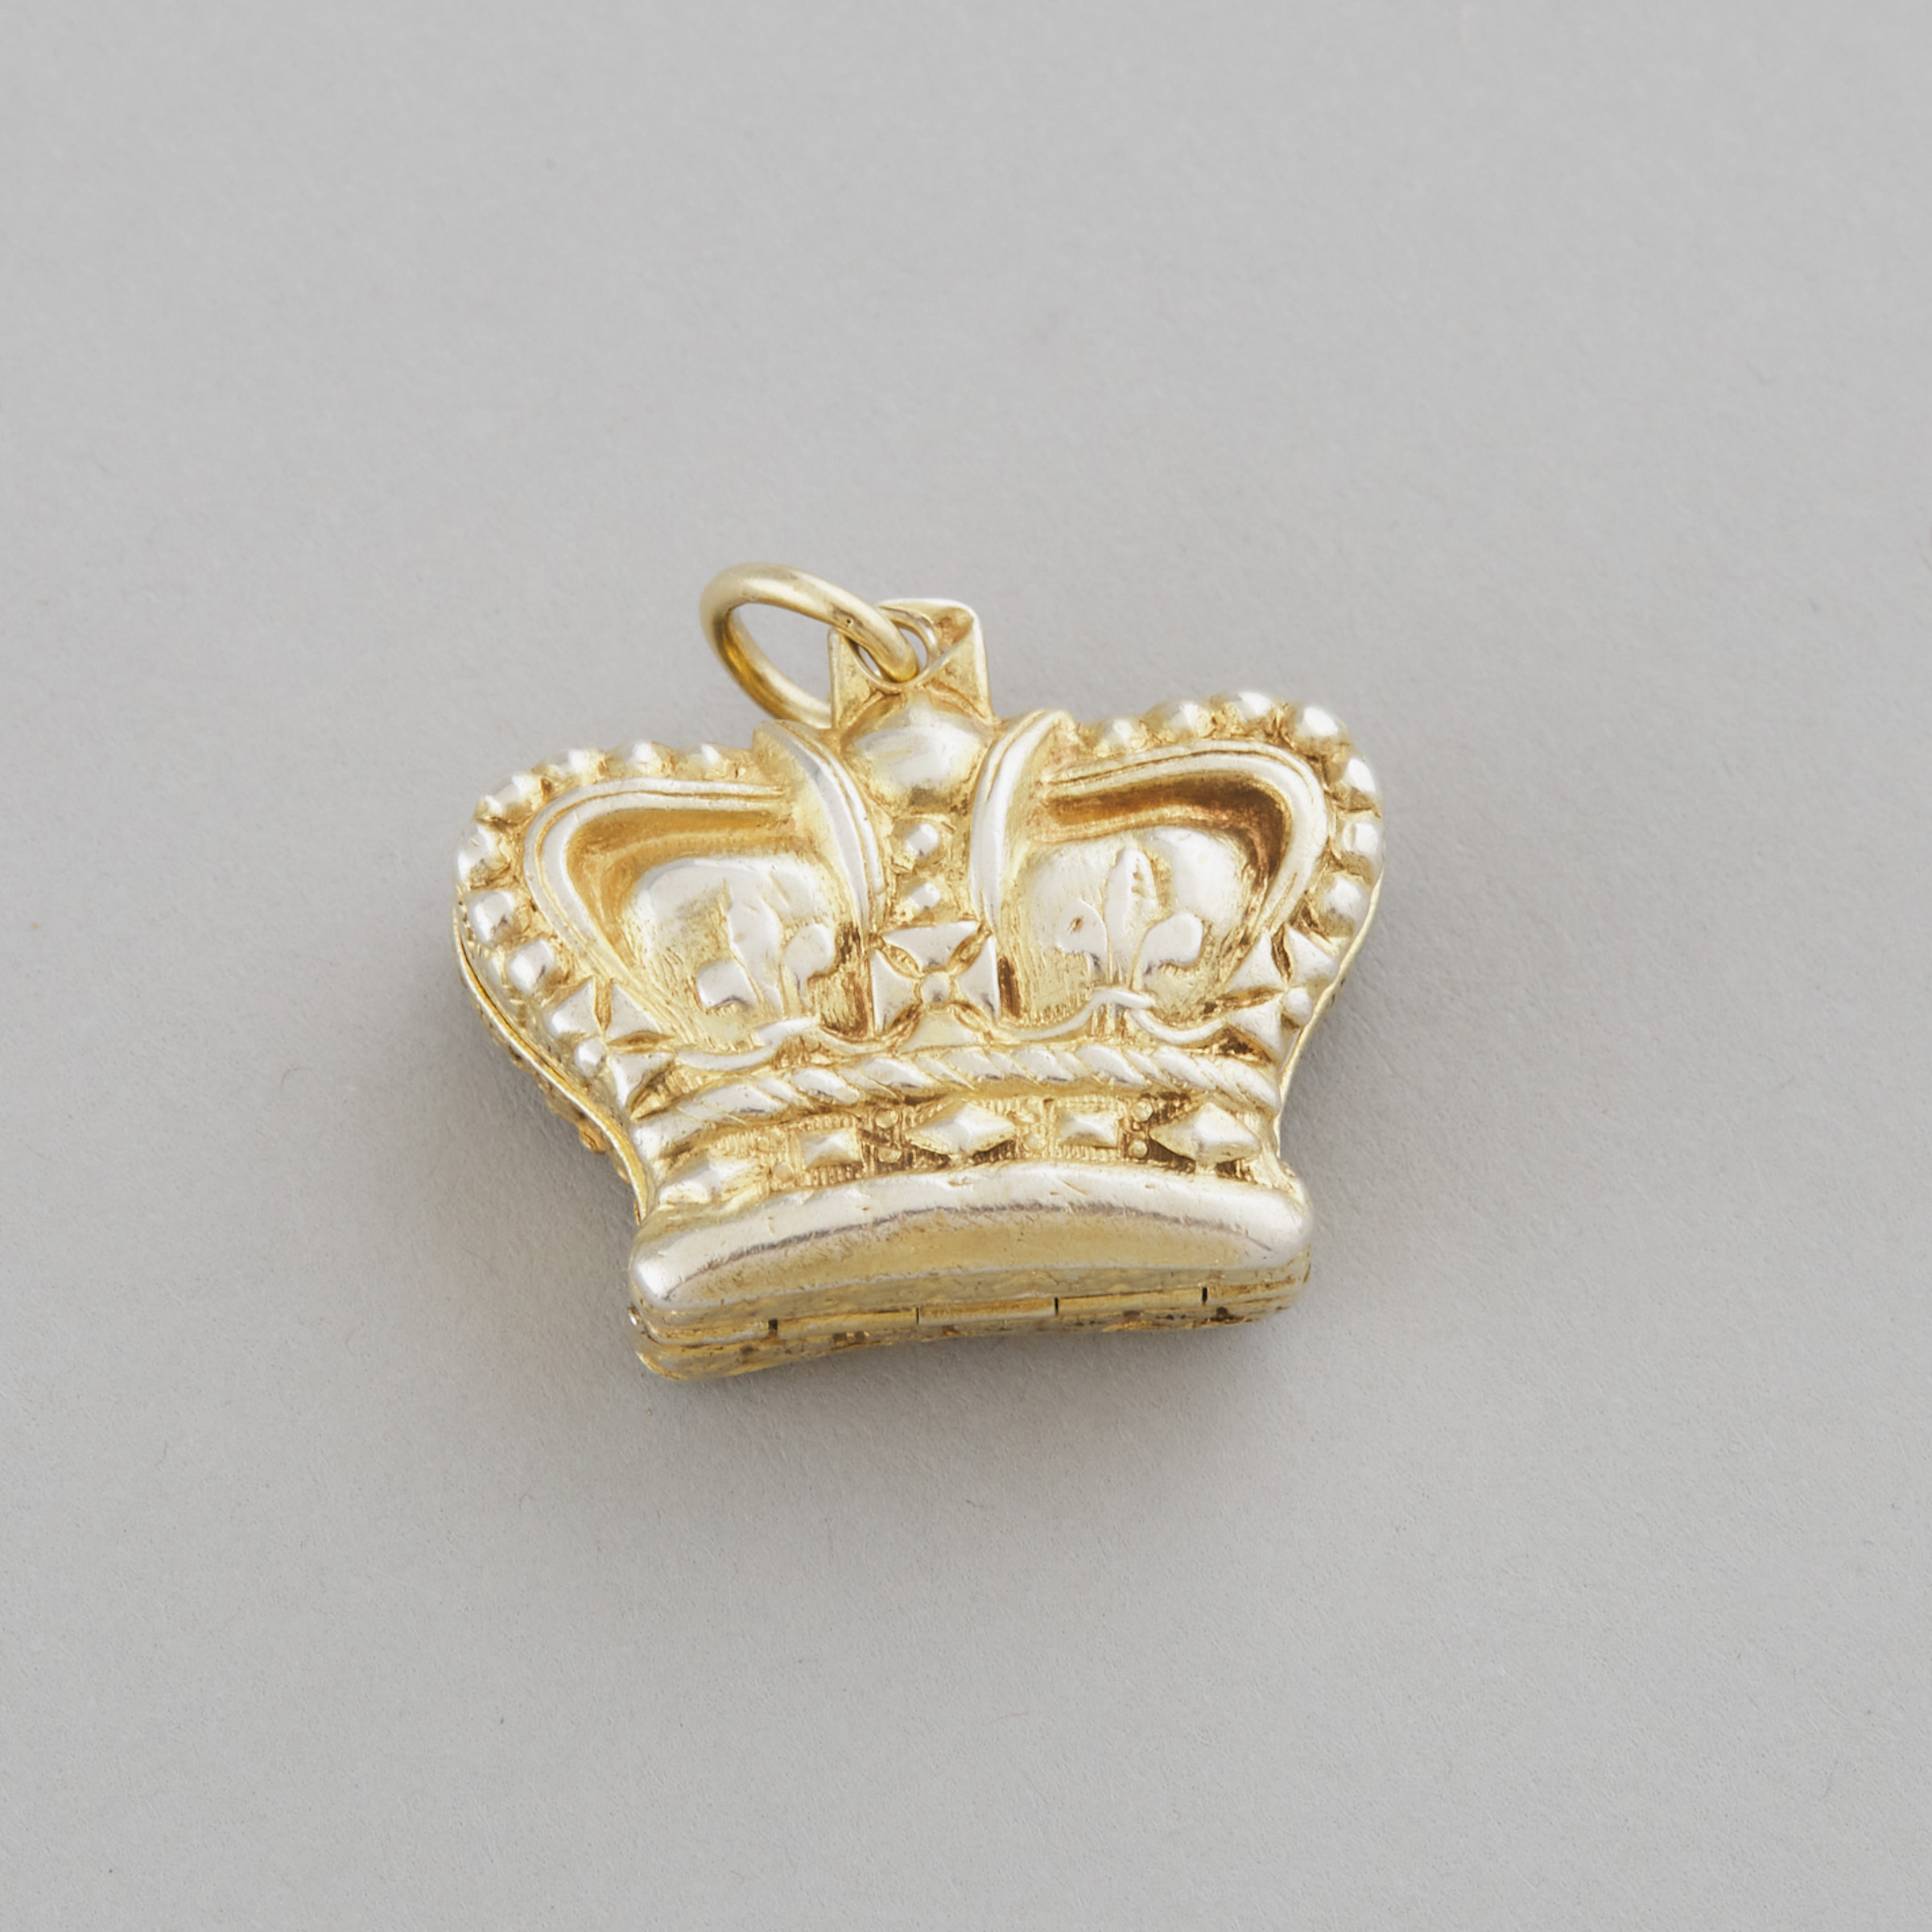 George IV Silver-Gilt Crown Form Vinaigrette, Joseph Willmore, London, 1820